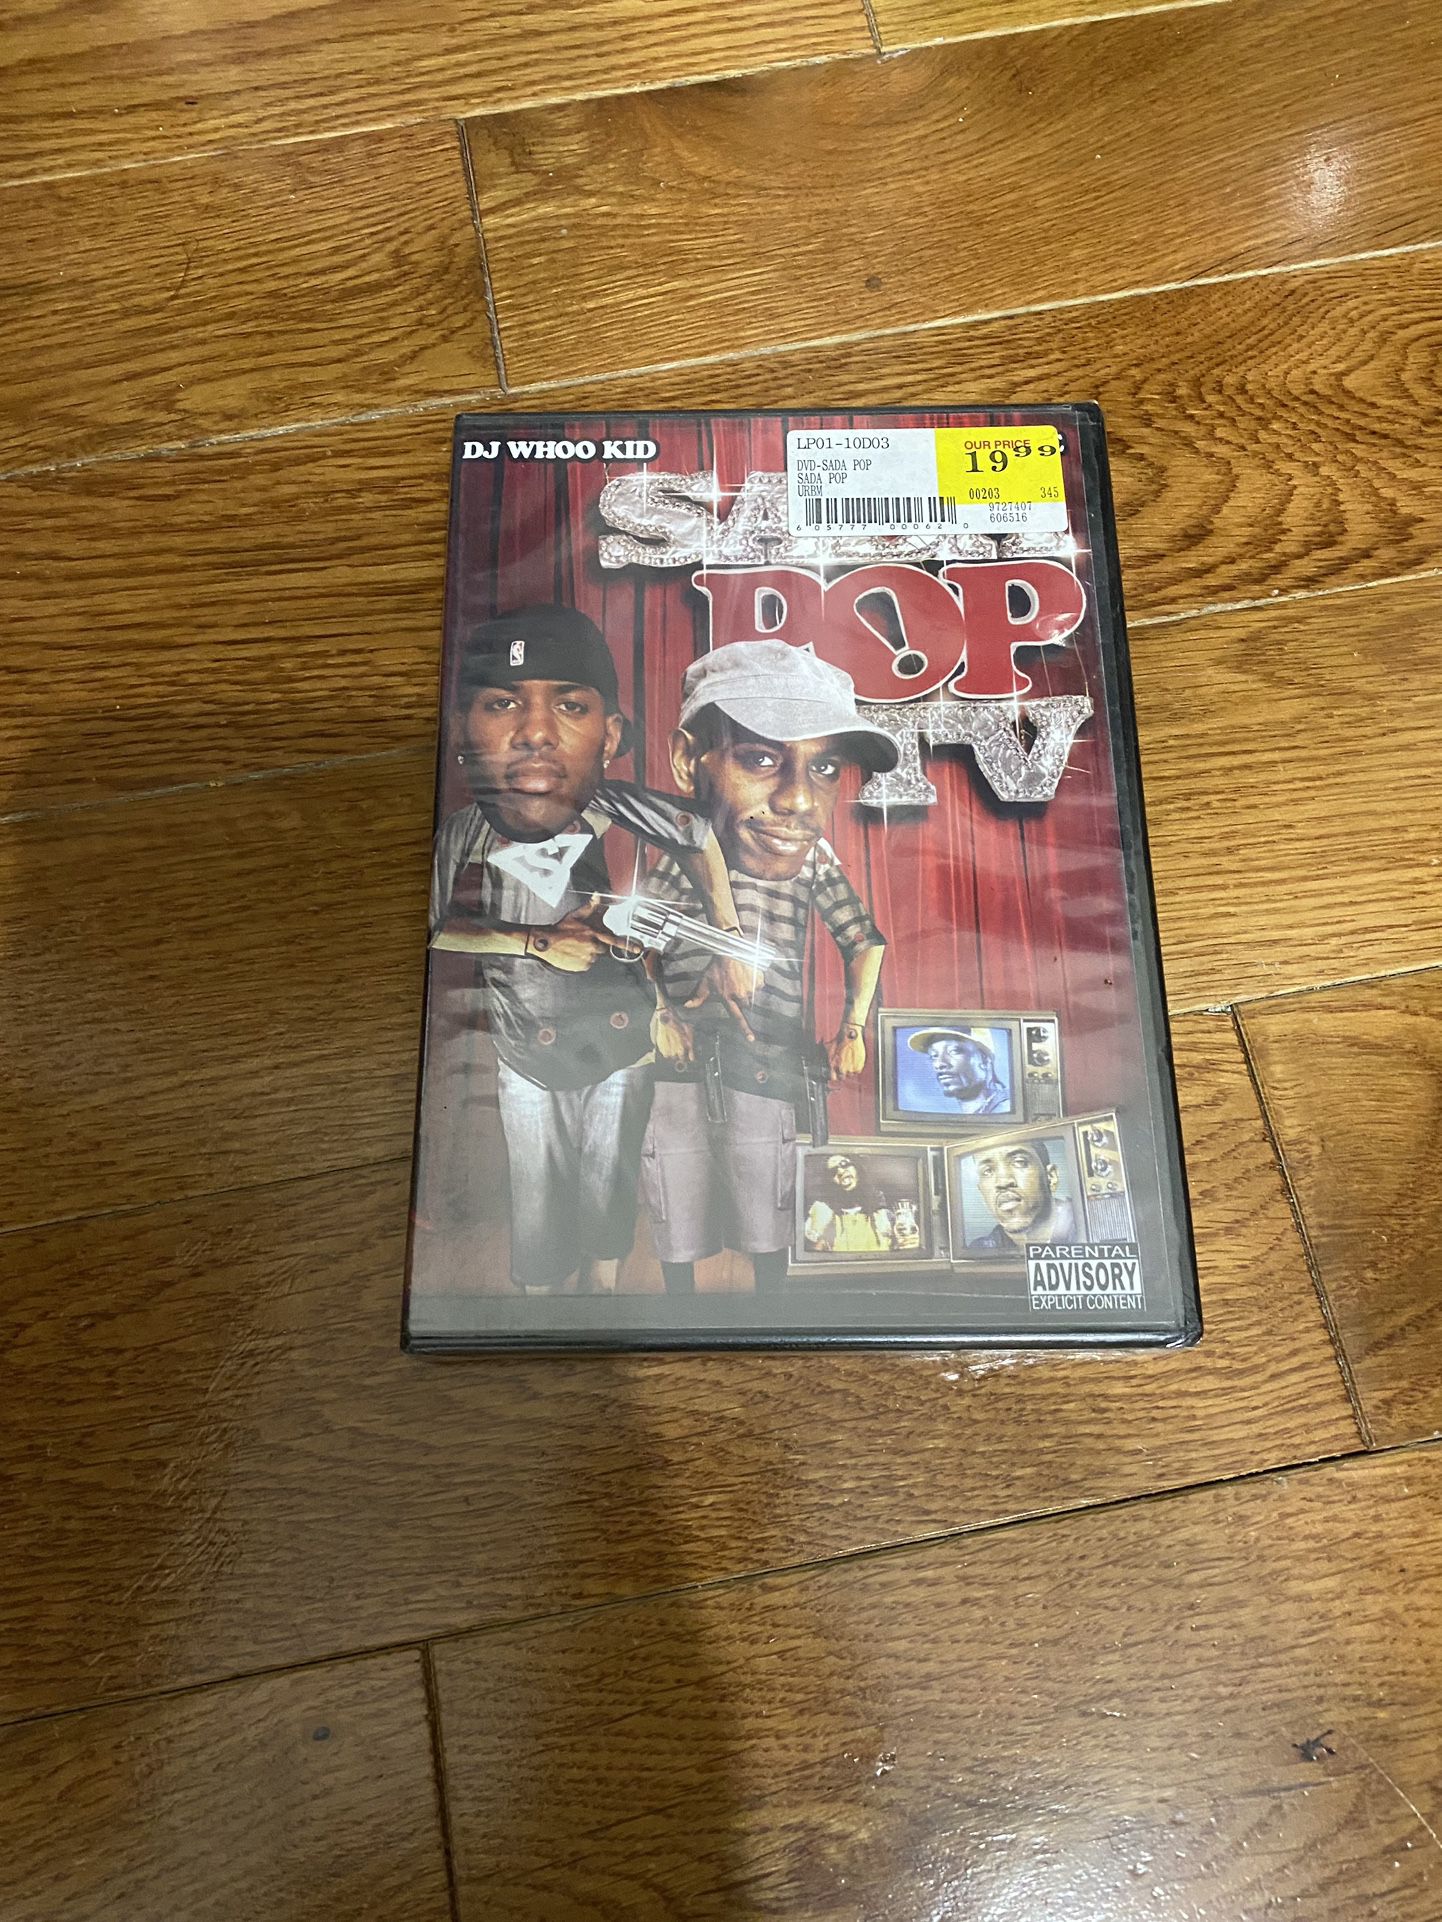 Sada Pop TV  DVD Dave Chappelle DJ Whoo Kid Snoop Dogg Banks G-Unit 50 Cent Rare